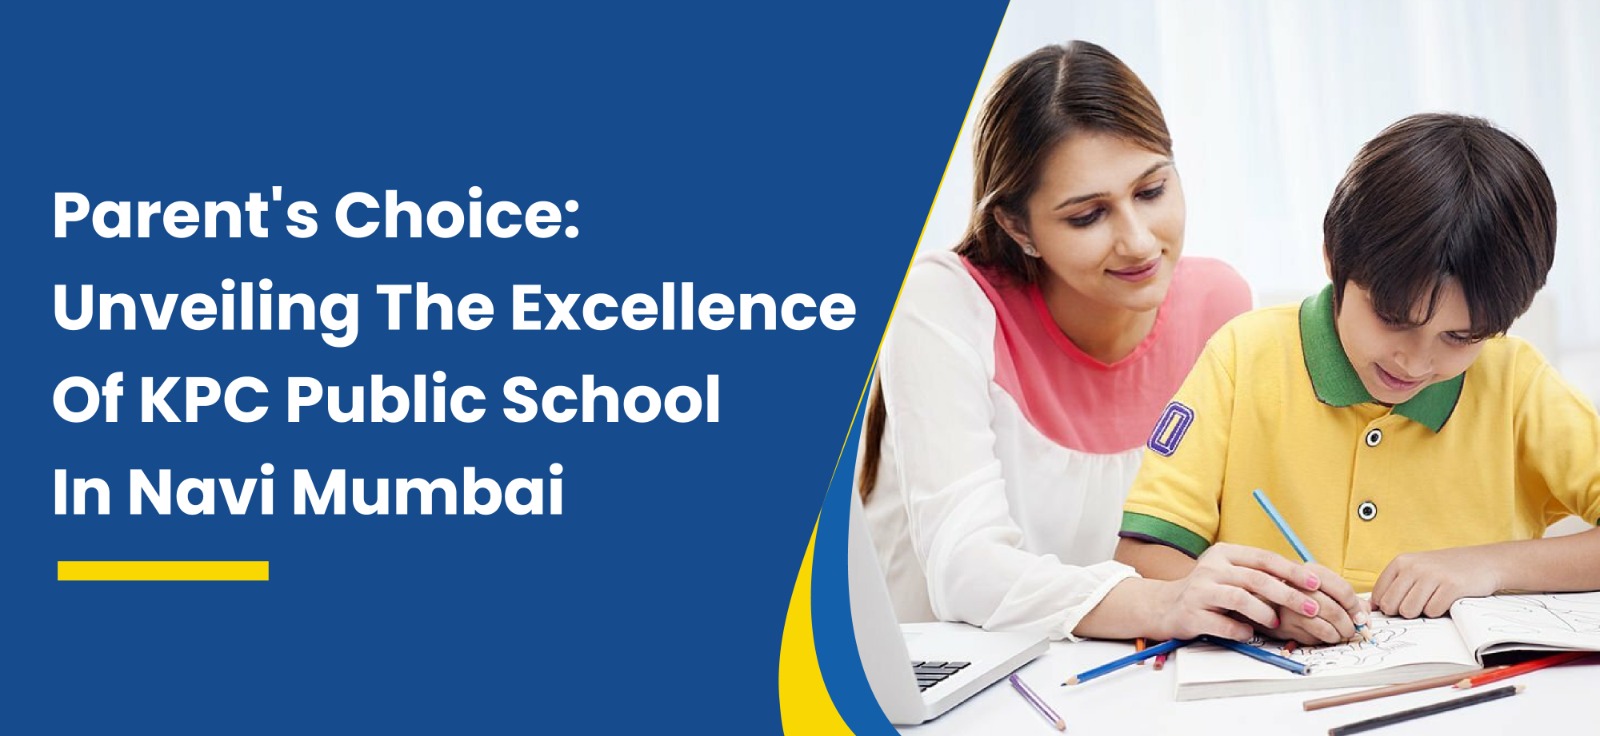 Parent's Choice: Unveiling the Excellence of KPC Public School in Navi Mumbai